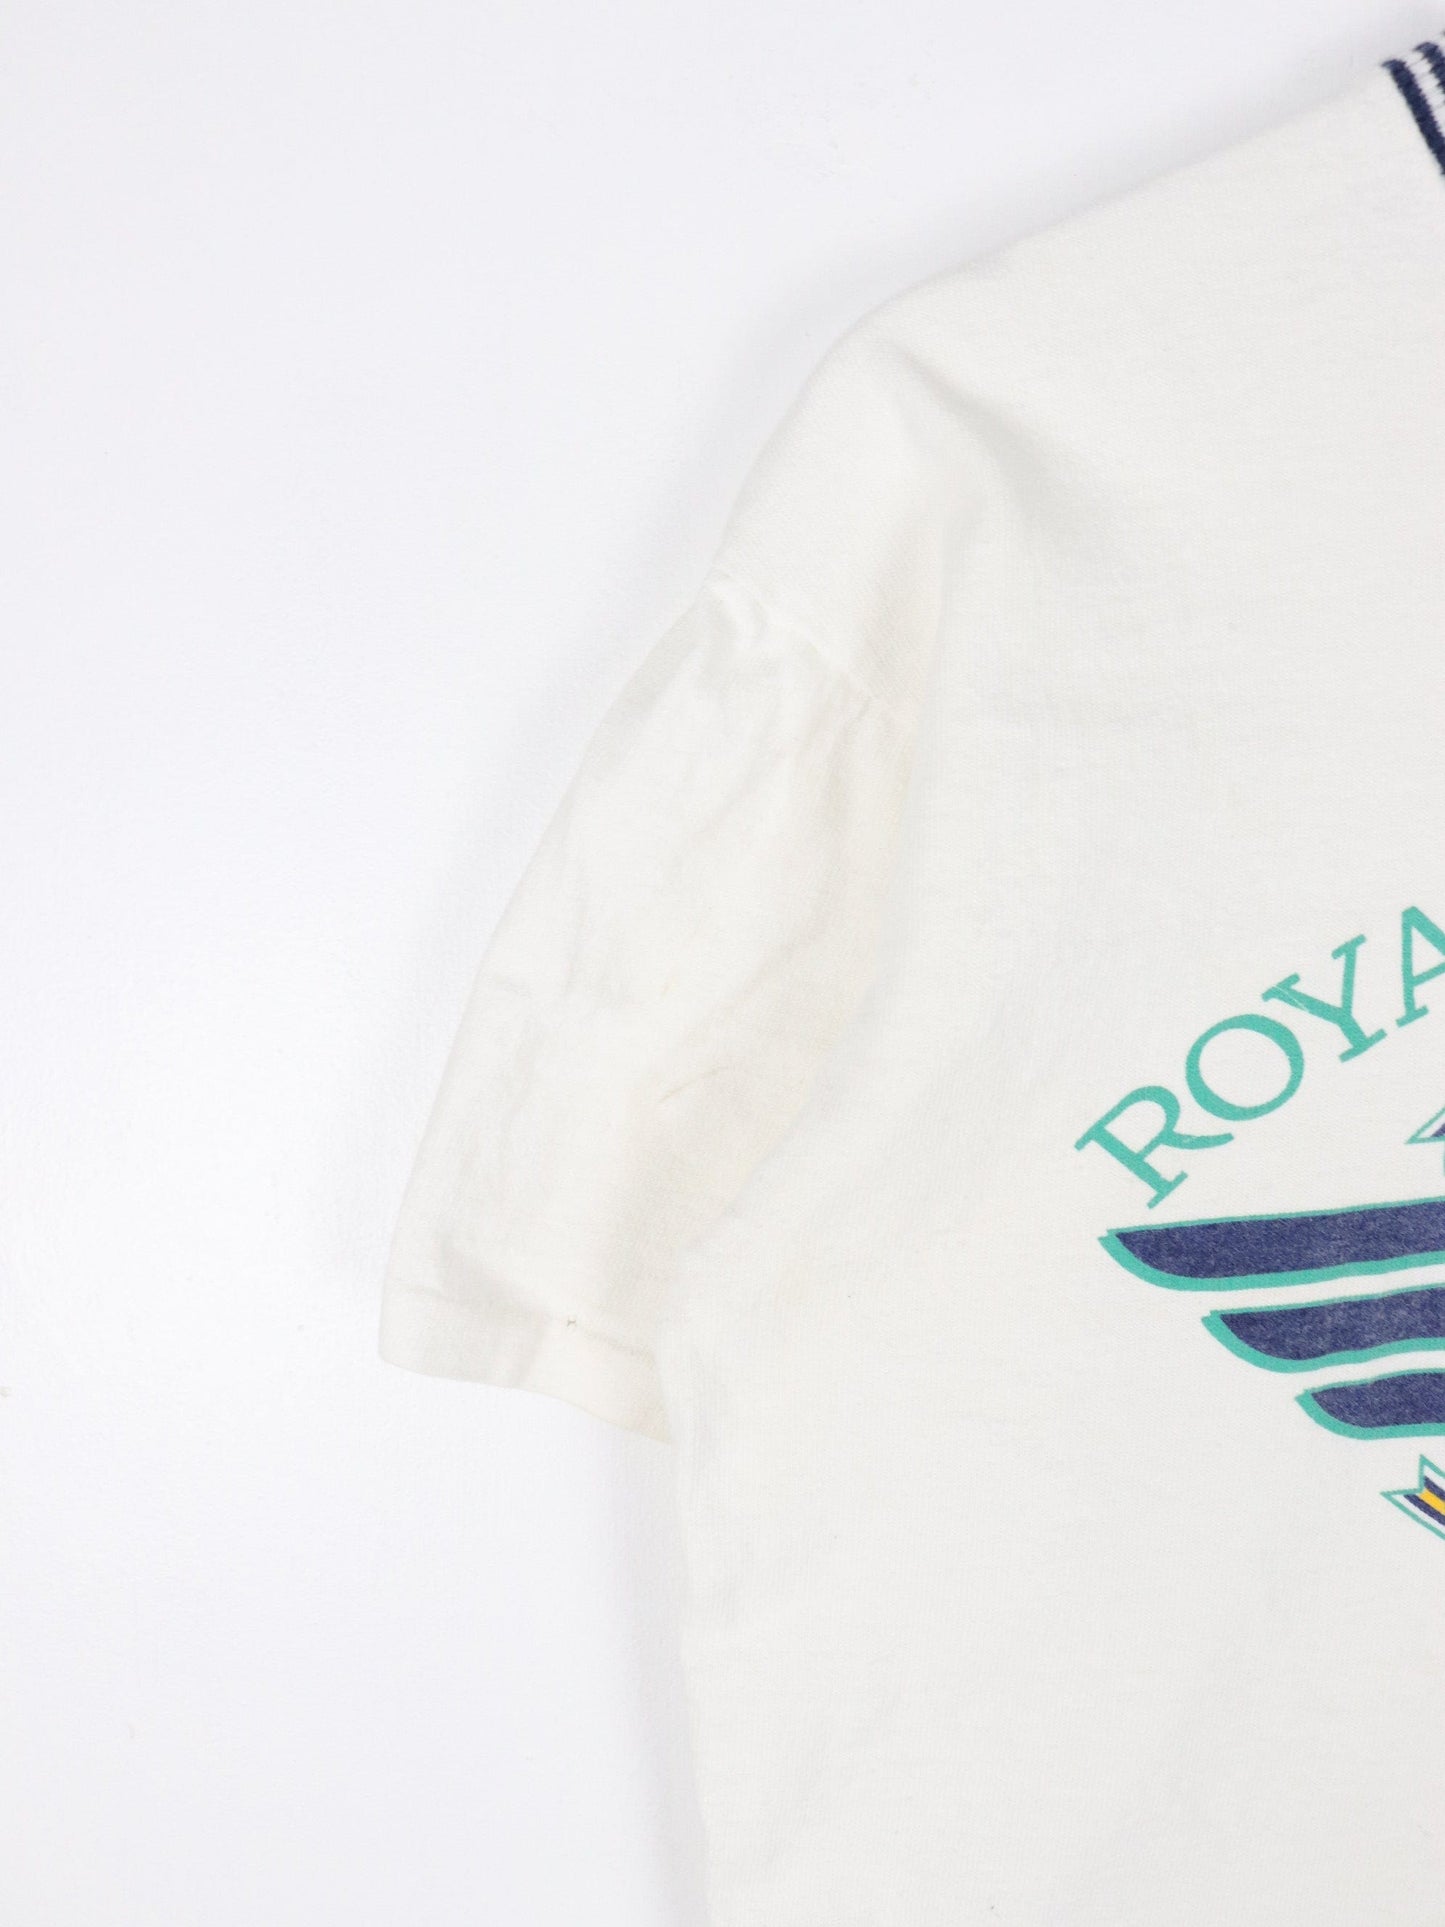 Wilson T-Shirts & Tank Tops Vintage WIlson T Shirt Fits Mens Medium White Royal Yacht Club 90s